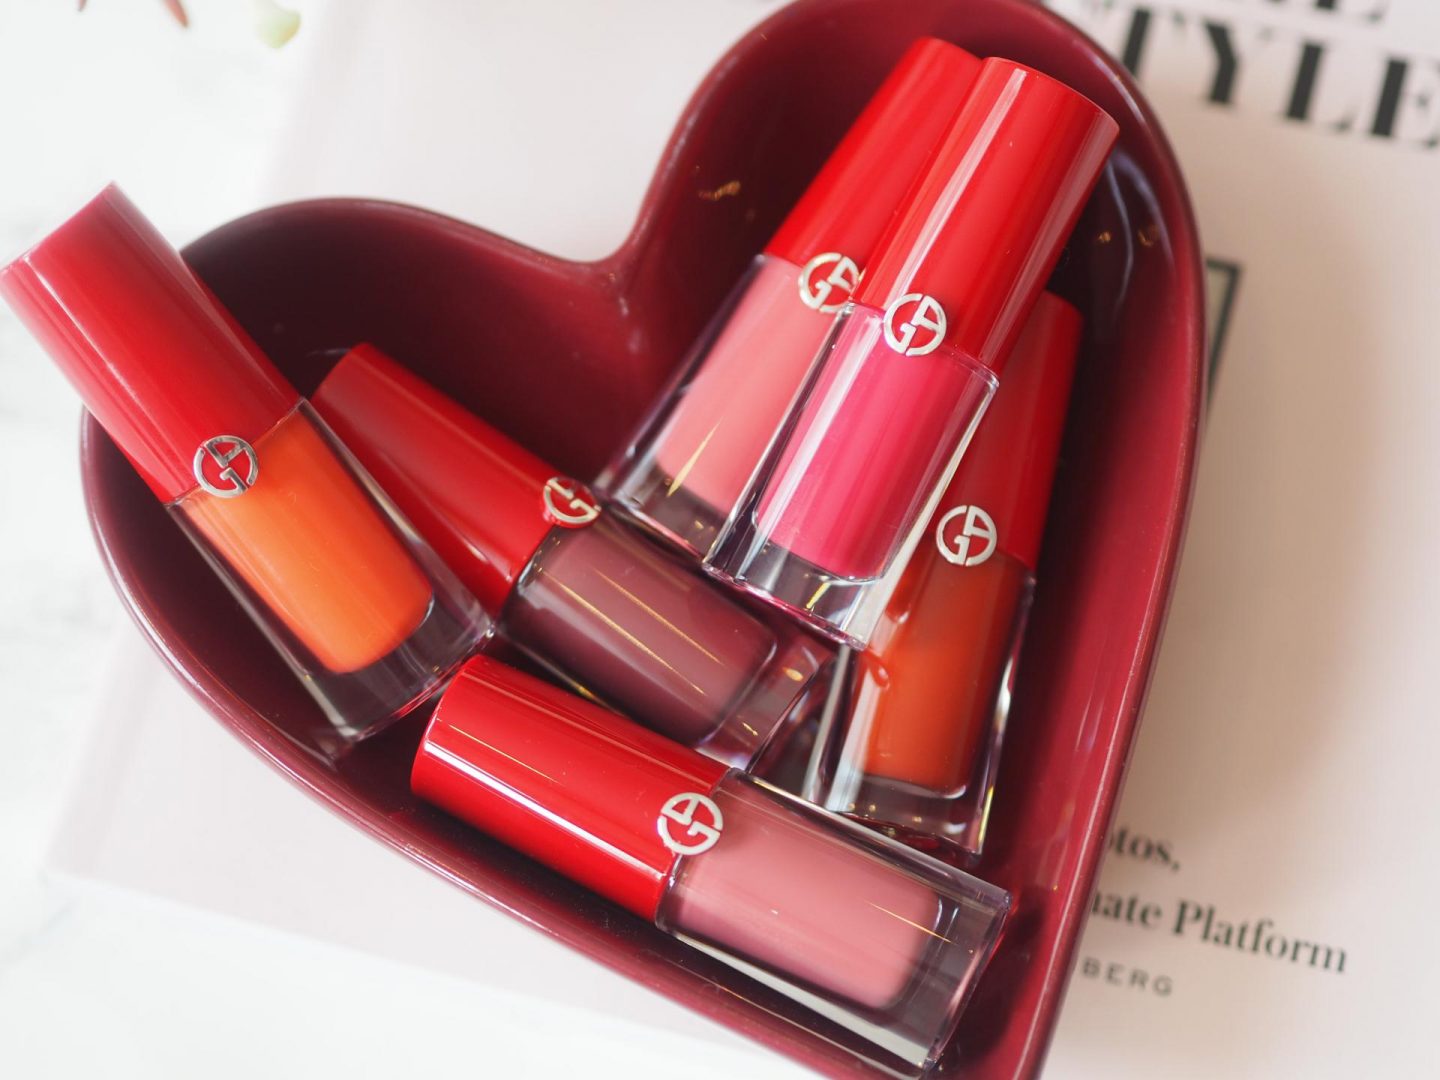 Breaking Beauty News: Giorgio Armani Lip Magnet Launches!